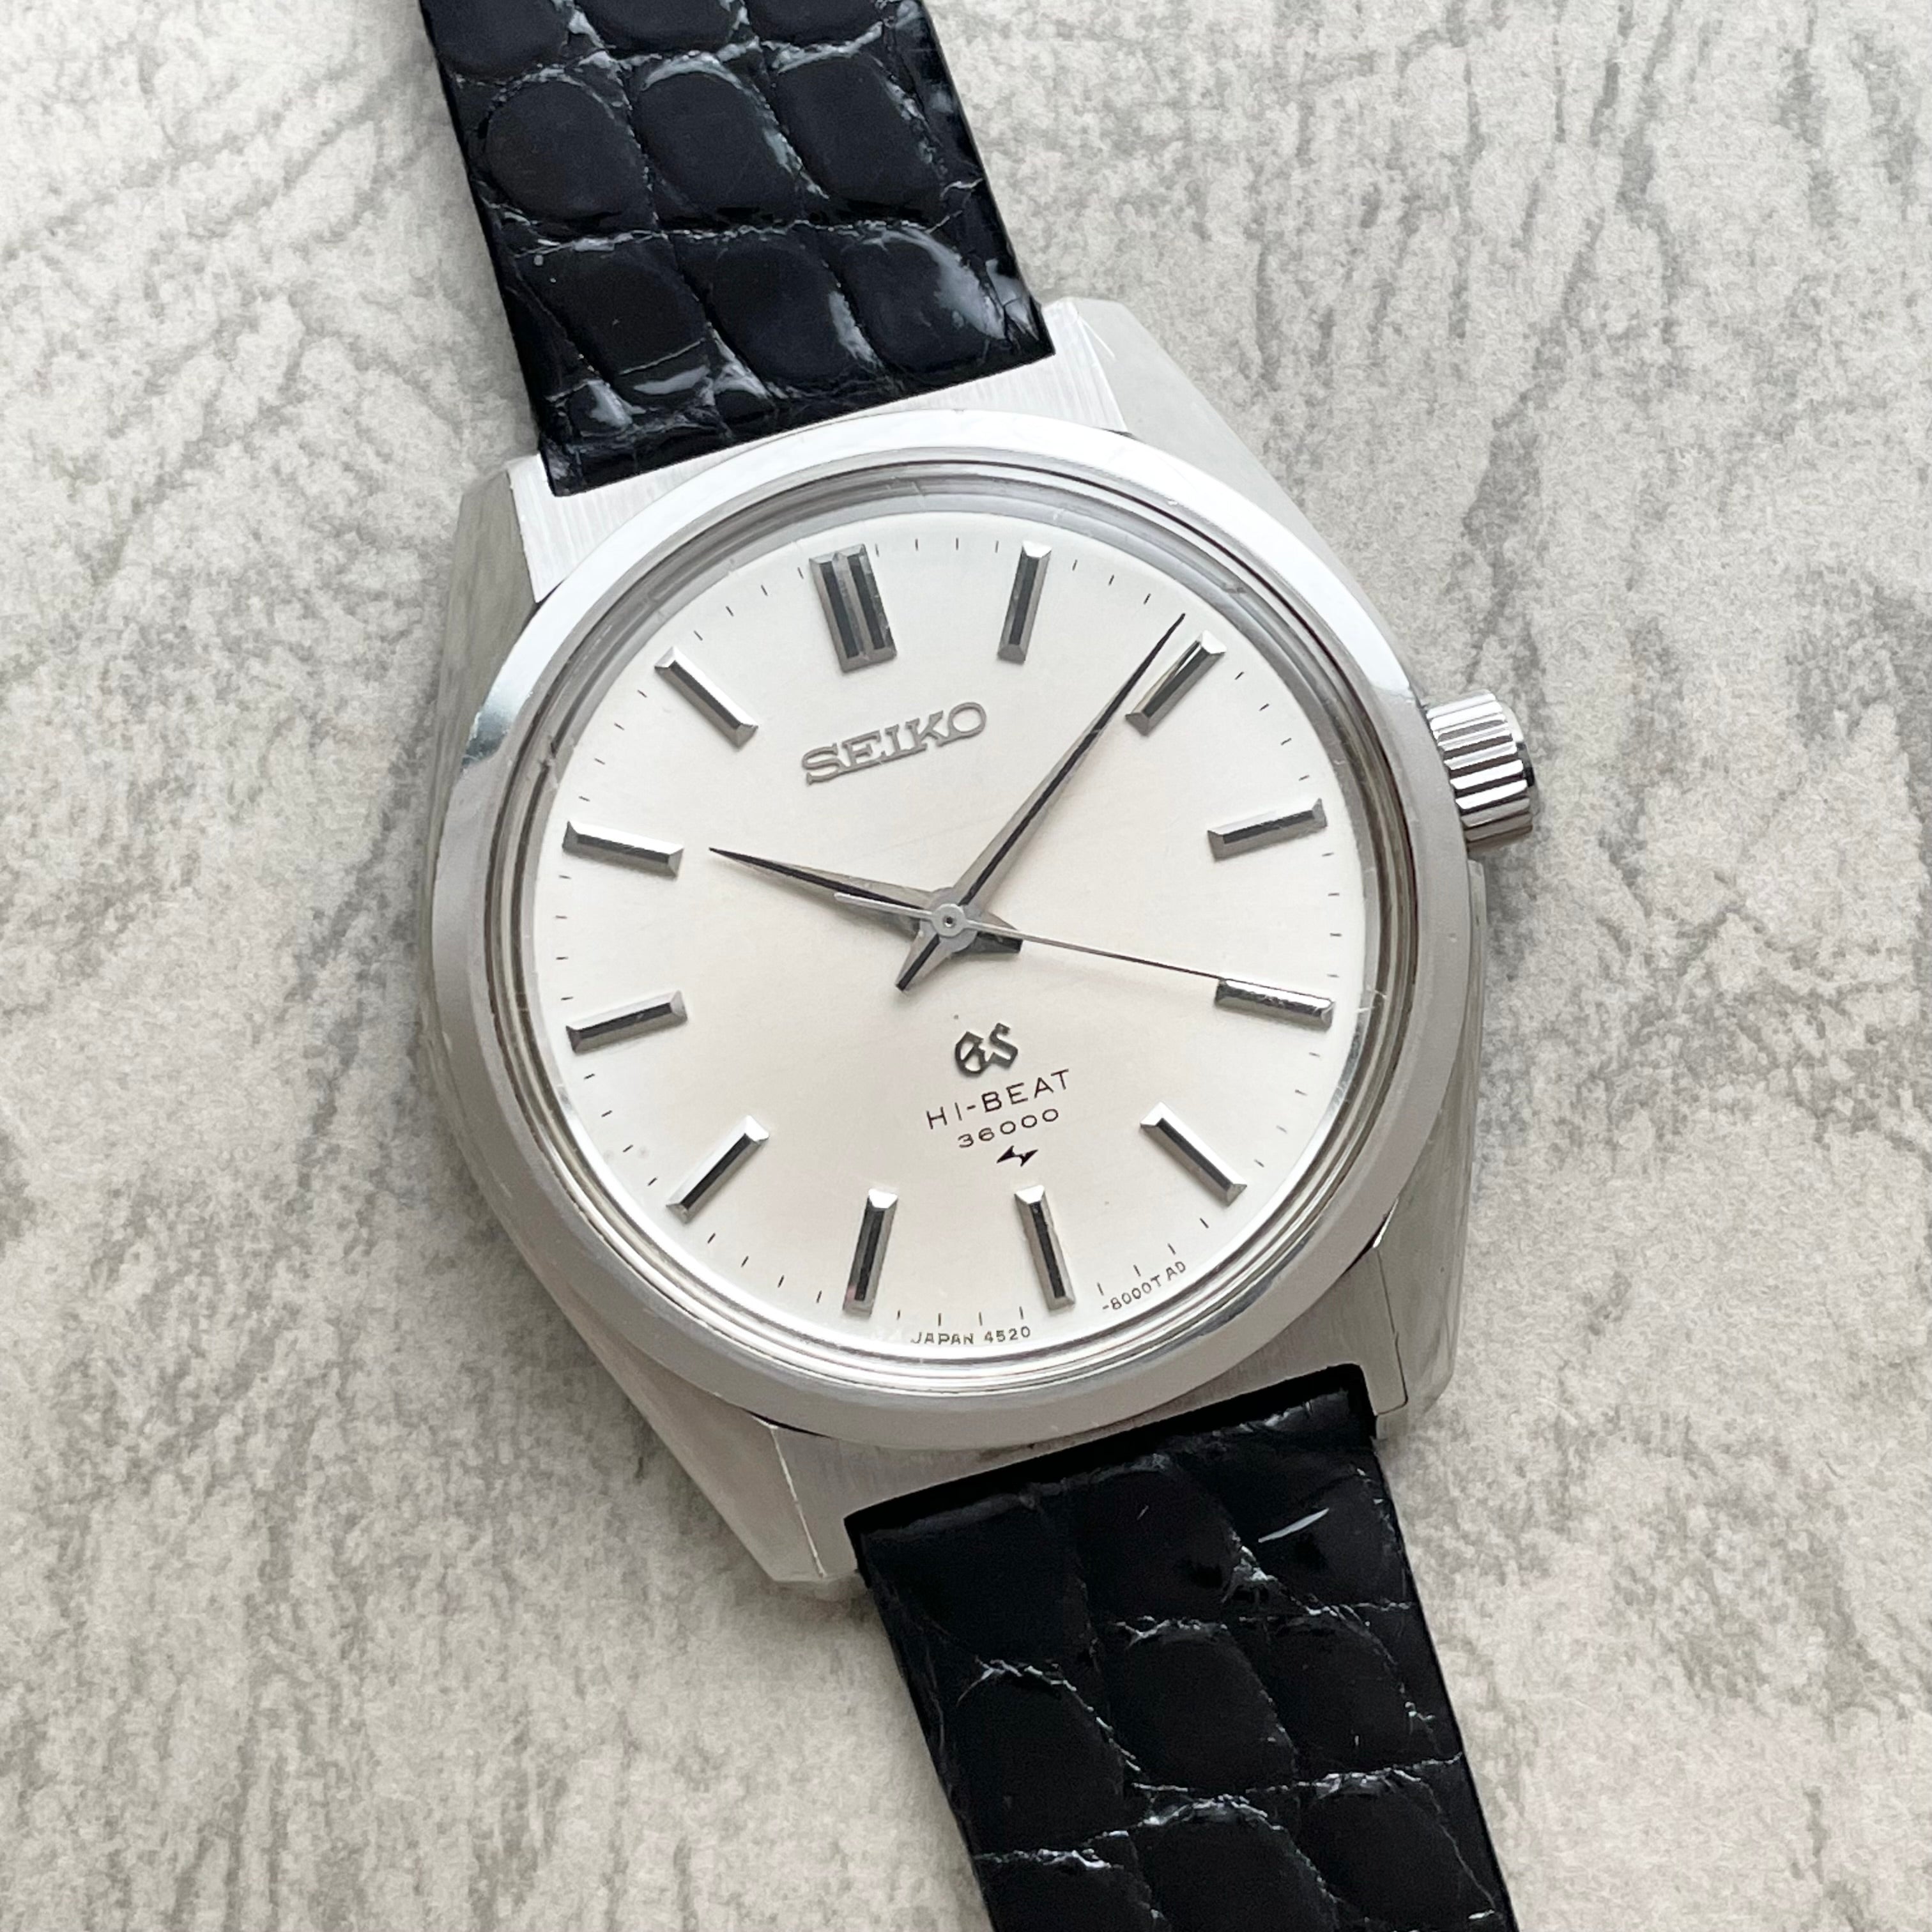 SEIKO】 グランドセイコー45GS 4520-8000 – REGALO vintage watch